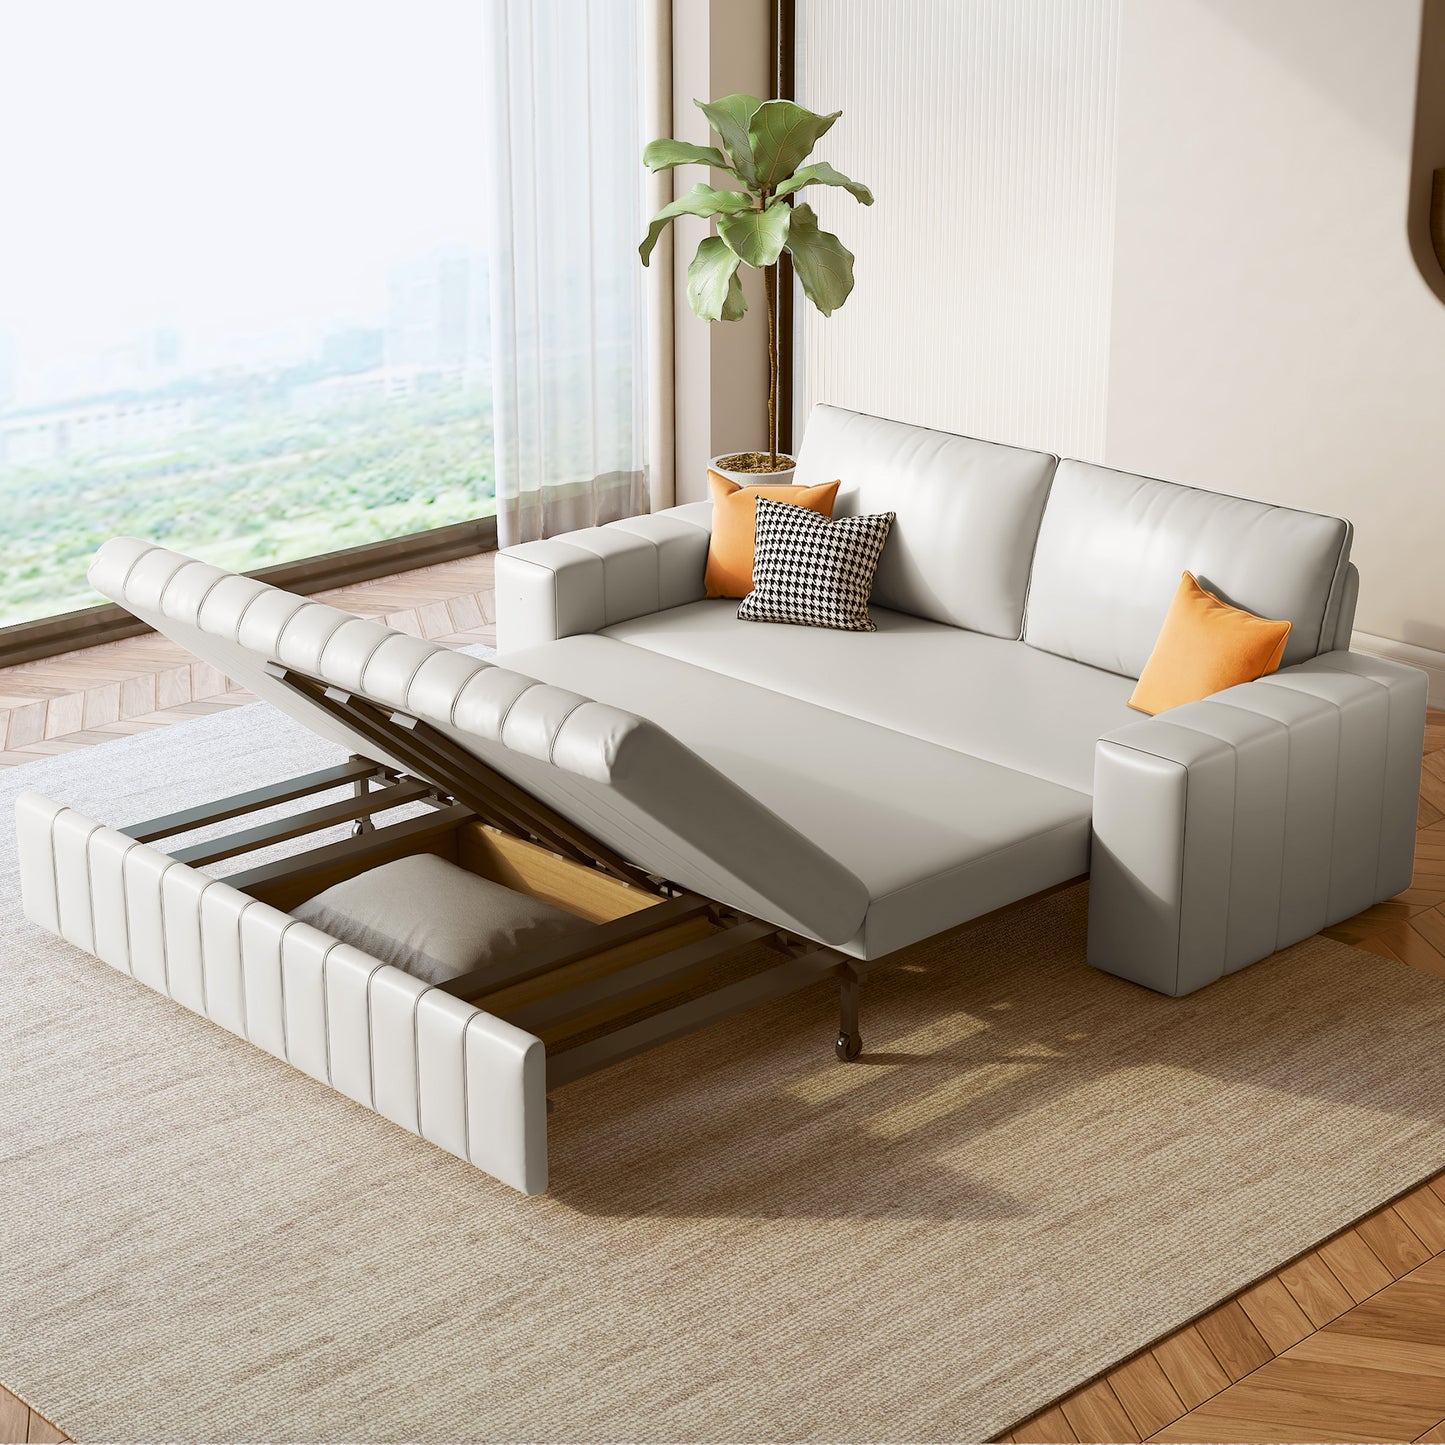 JASIWAY Folding Sofa with Storage Cabinet